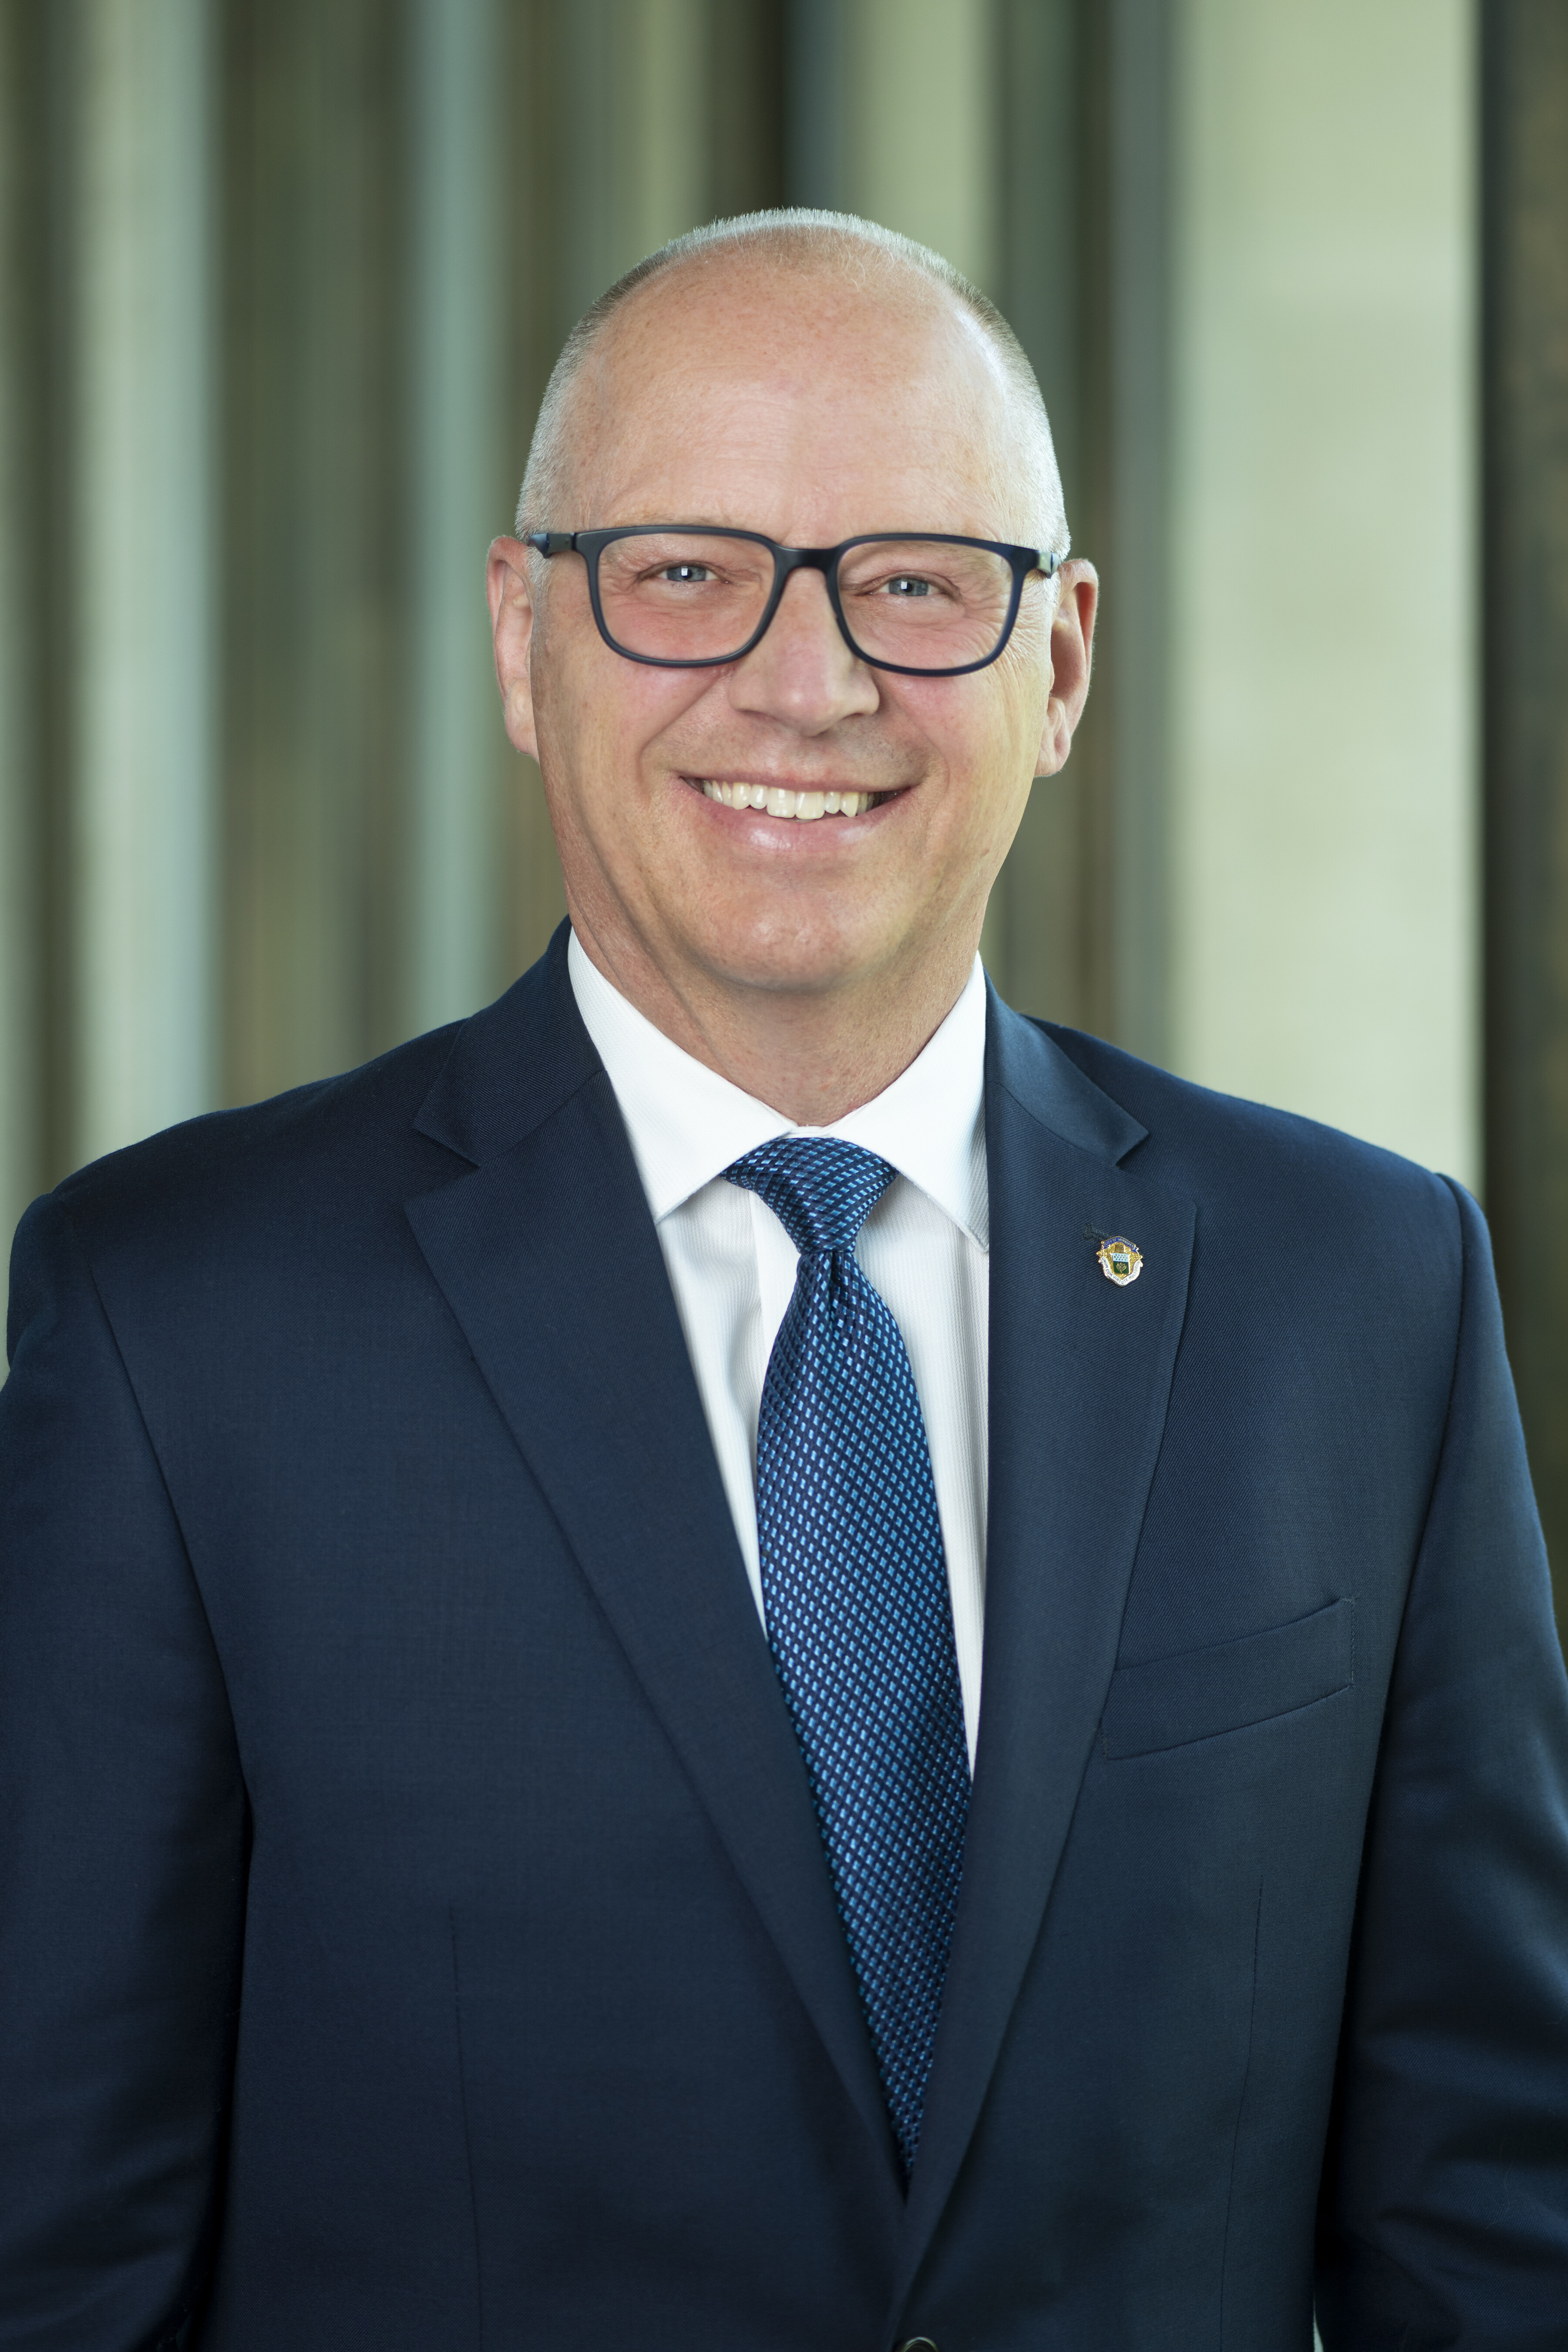 Winnipeg Mayor Scott Gillingham in a blue suit and tie wearing dark framed glasses.